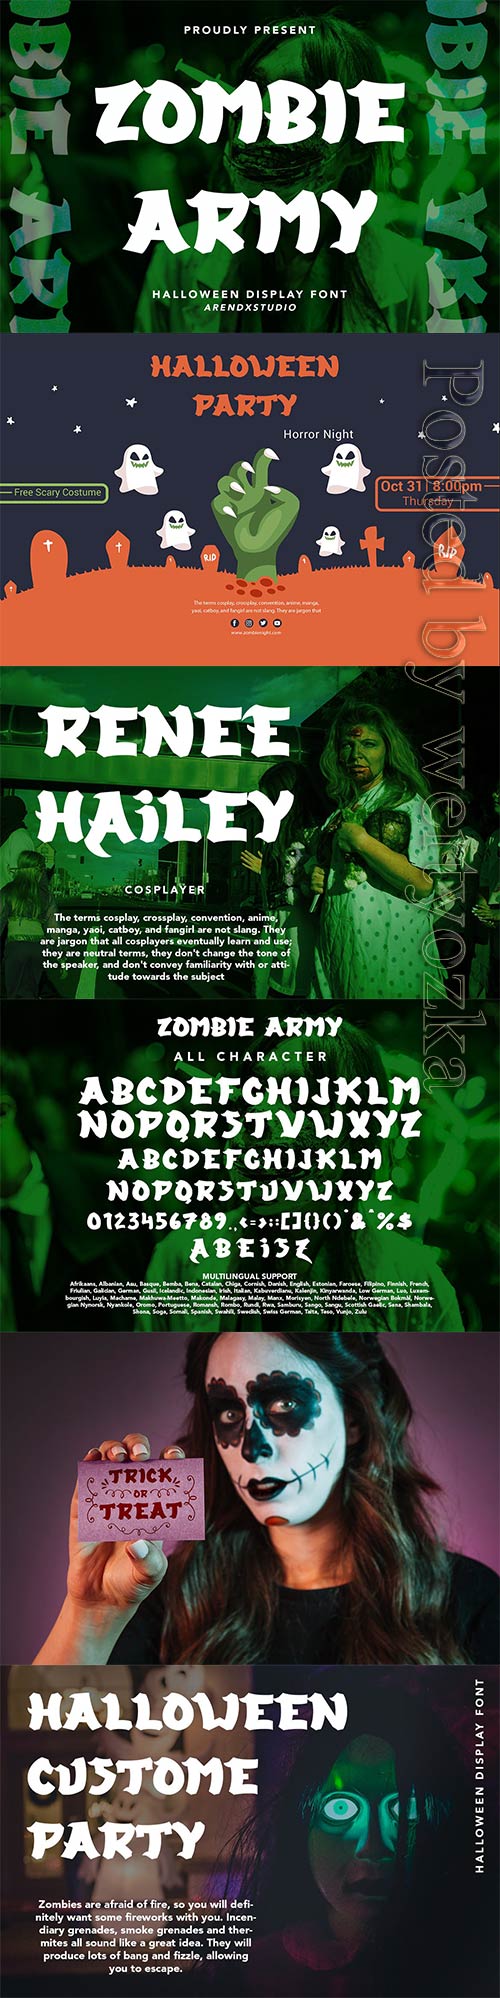 Zombie Army - Halloween Display Font